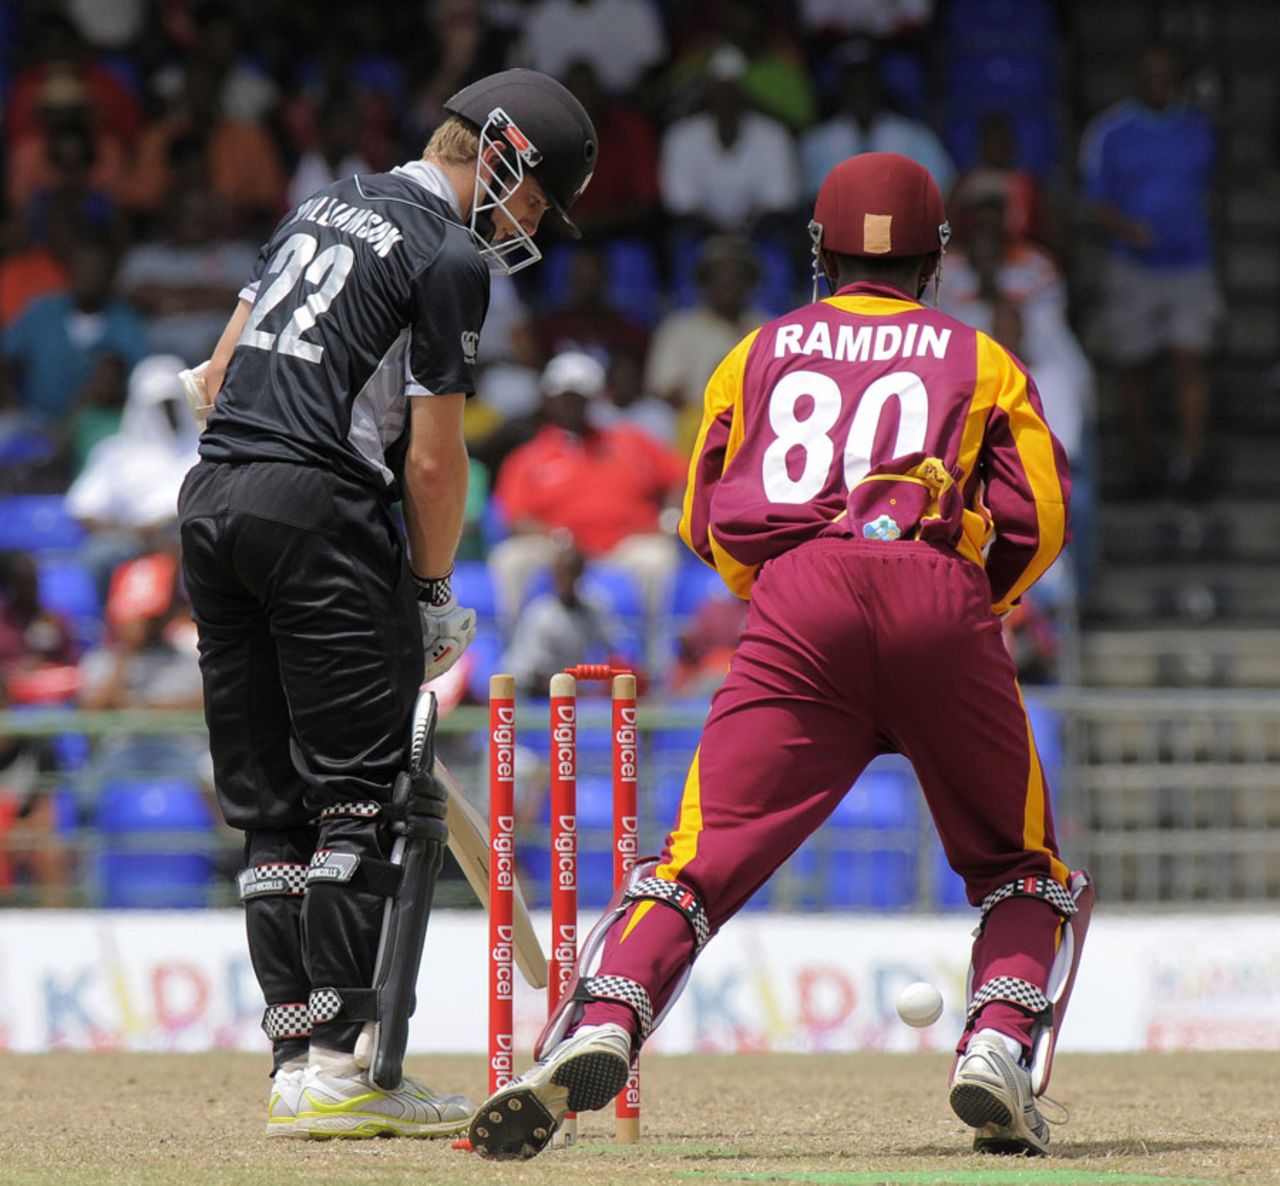 Kane Williamson was bowled for 9, West Indies v New Zealand, 3rd ODI, Basseterre, July 11, 2012